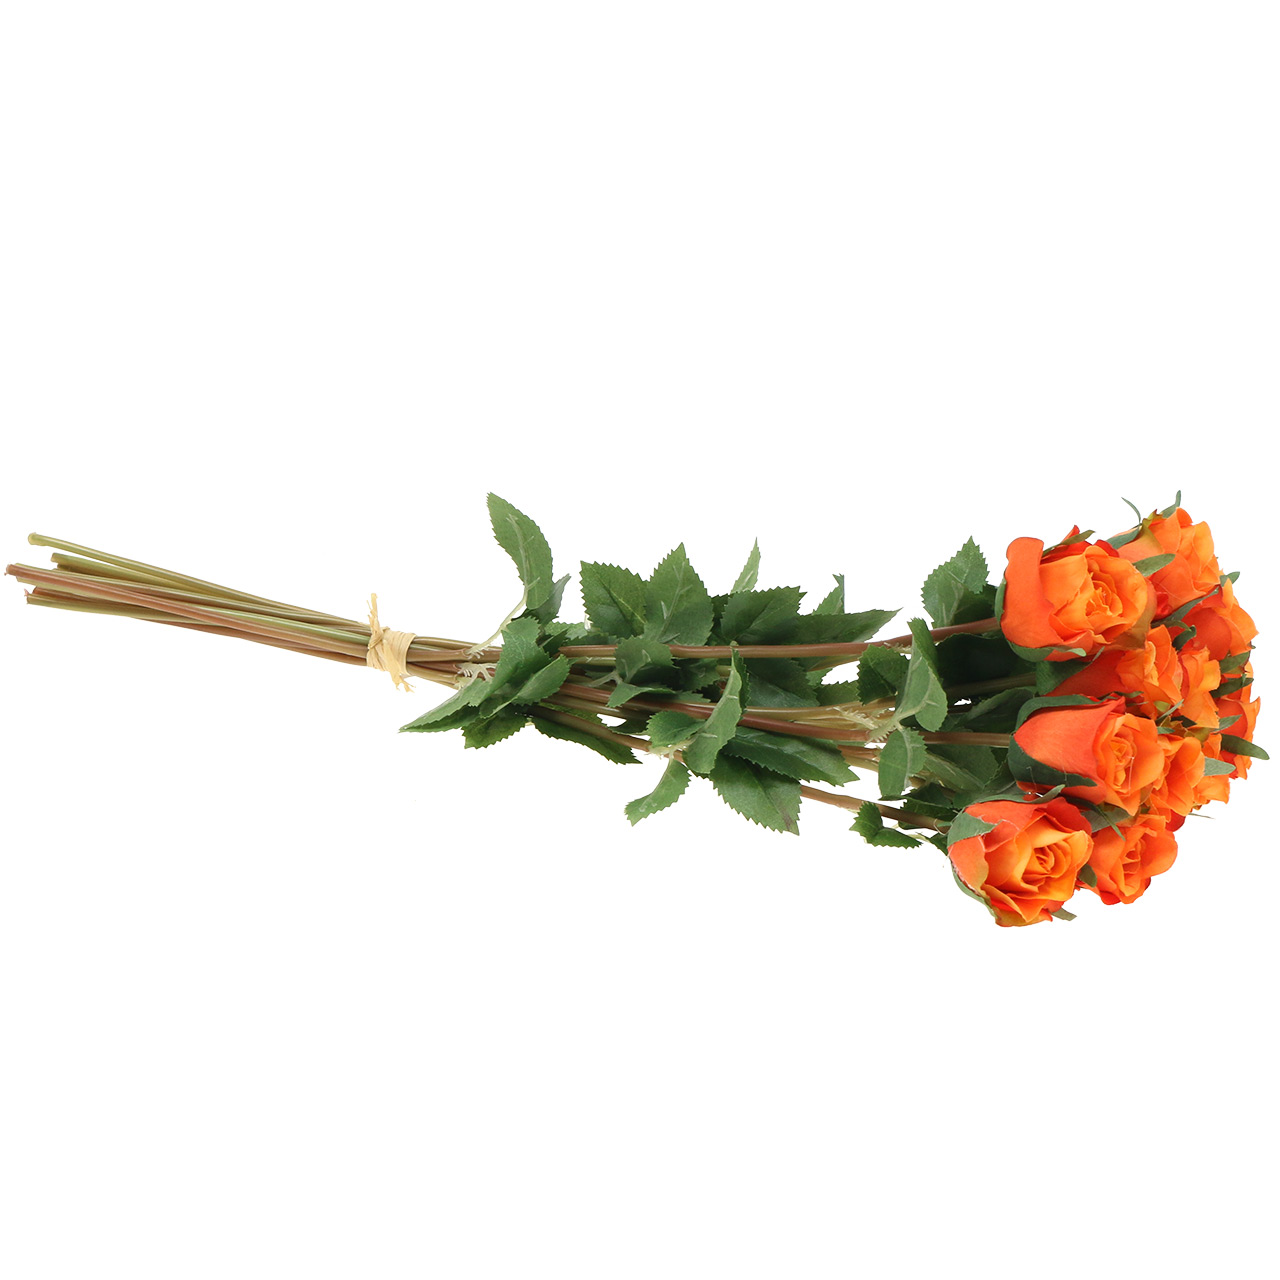 Rose Bauernrose Seidenblume Kunstblume Kunstpflanze orange L 41 cm 180249 F7 